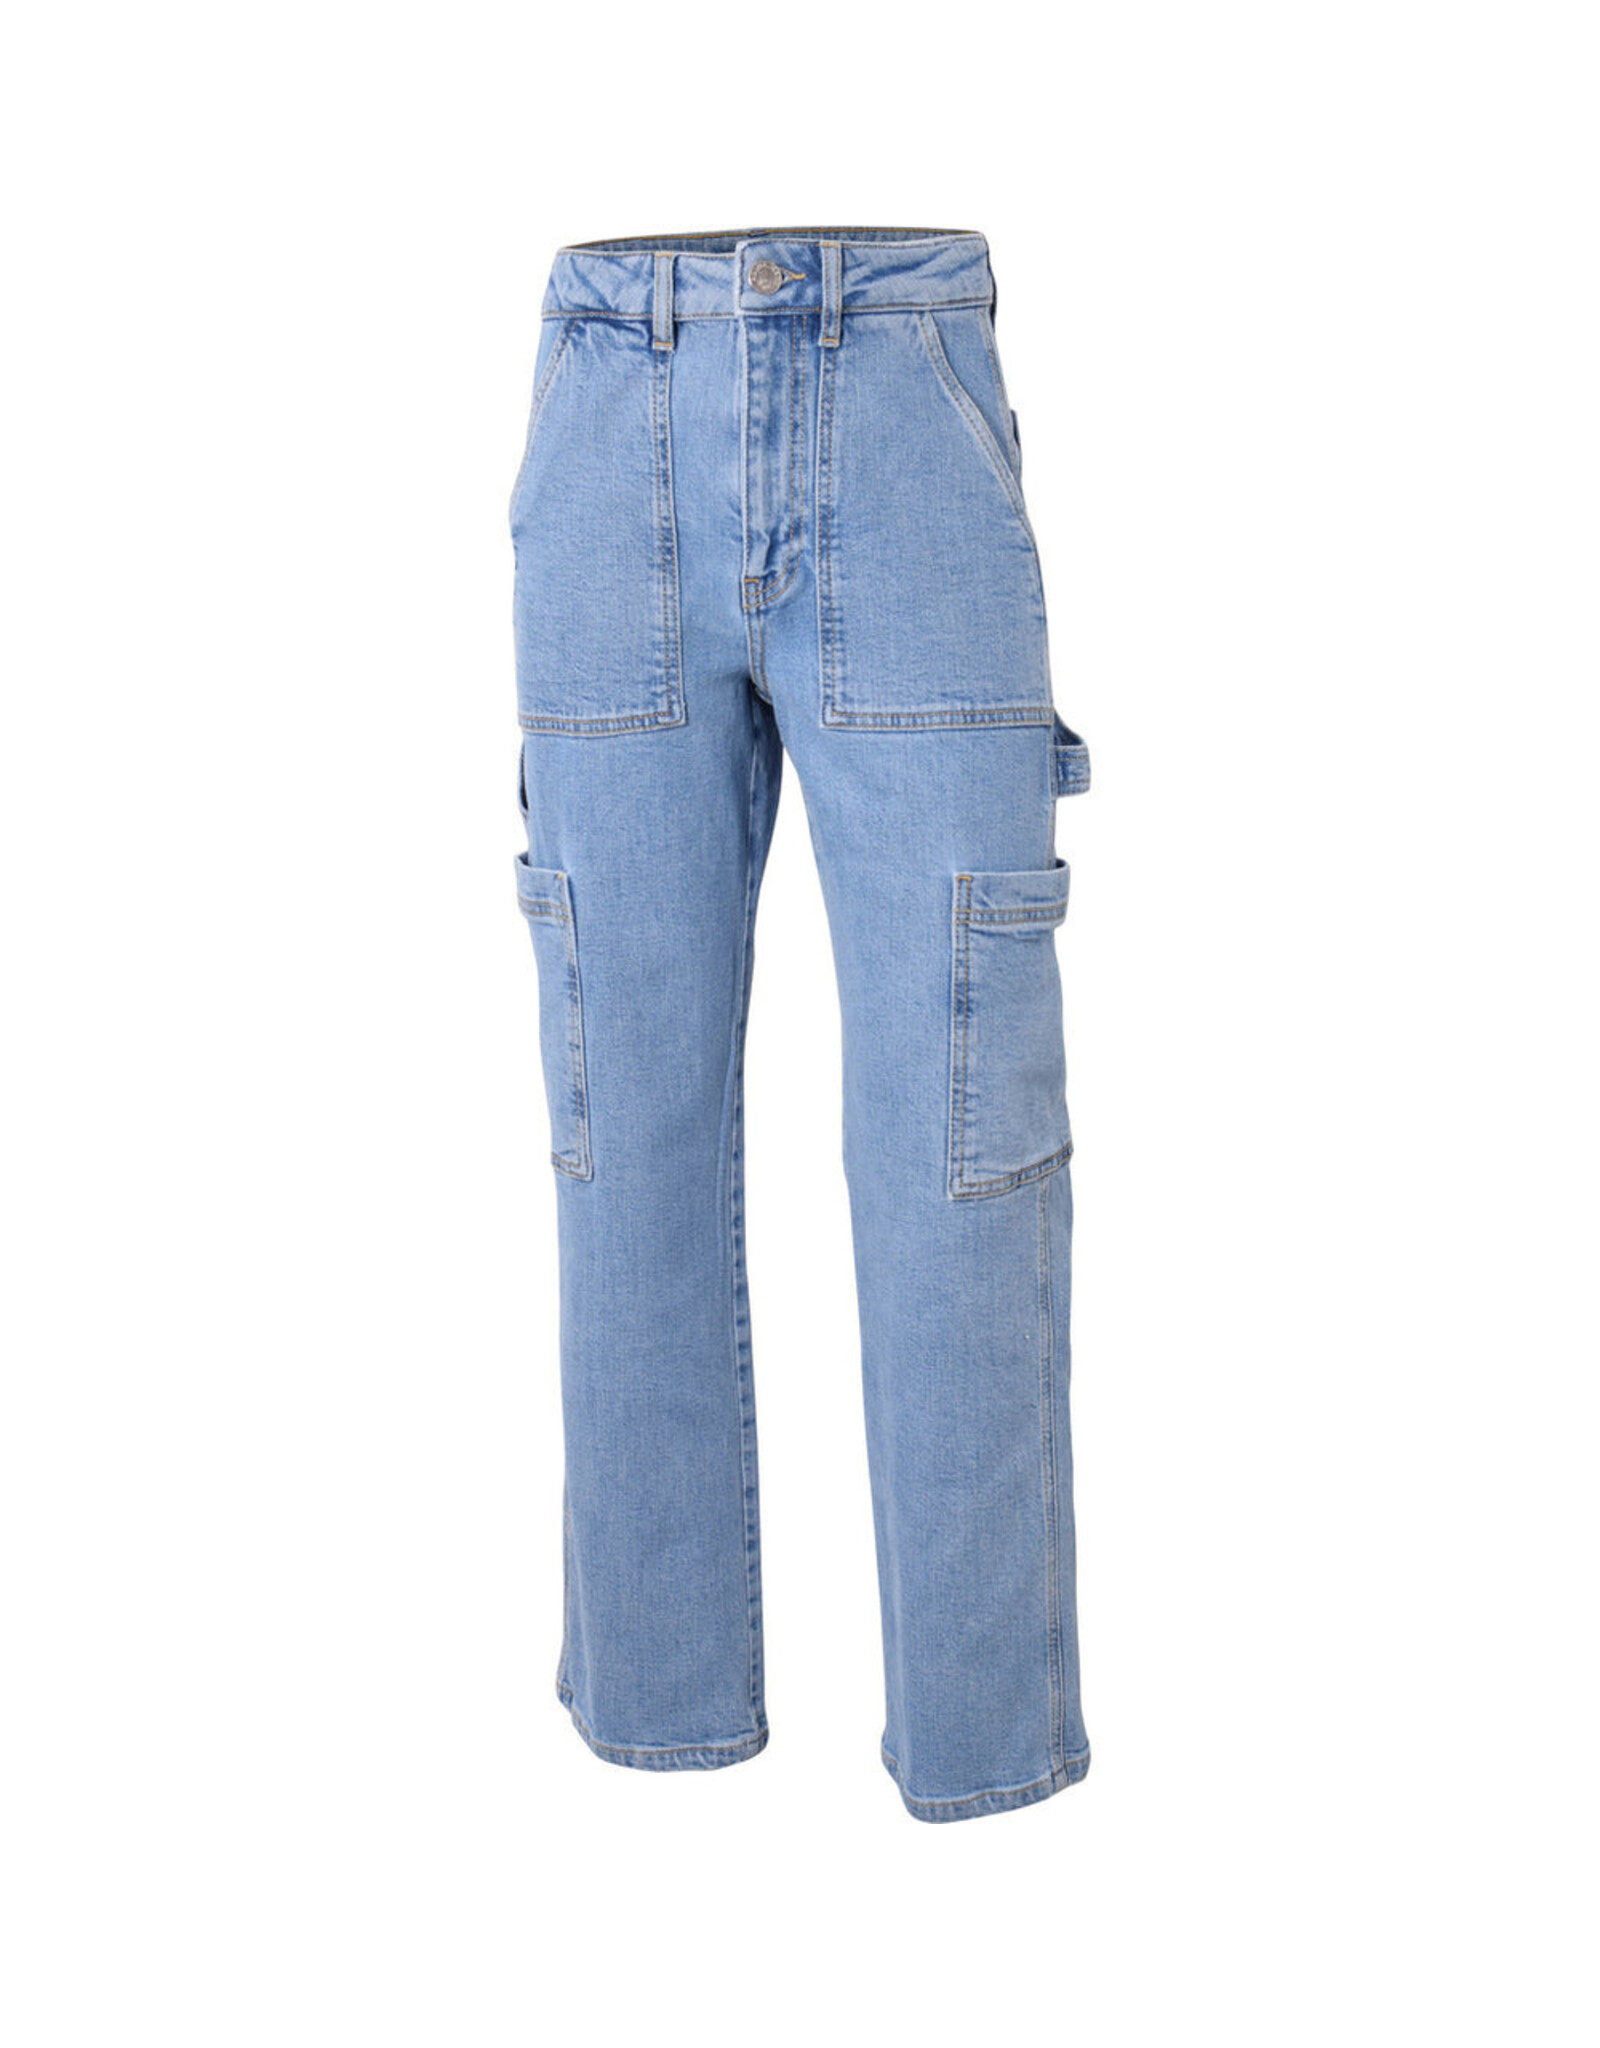 HOUNd jeans pocket wide blue denim